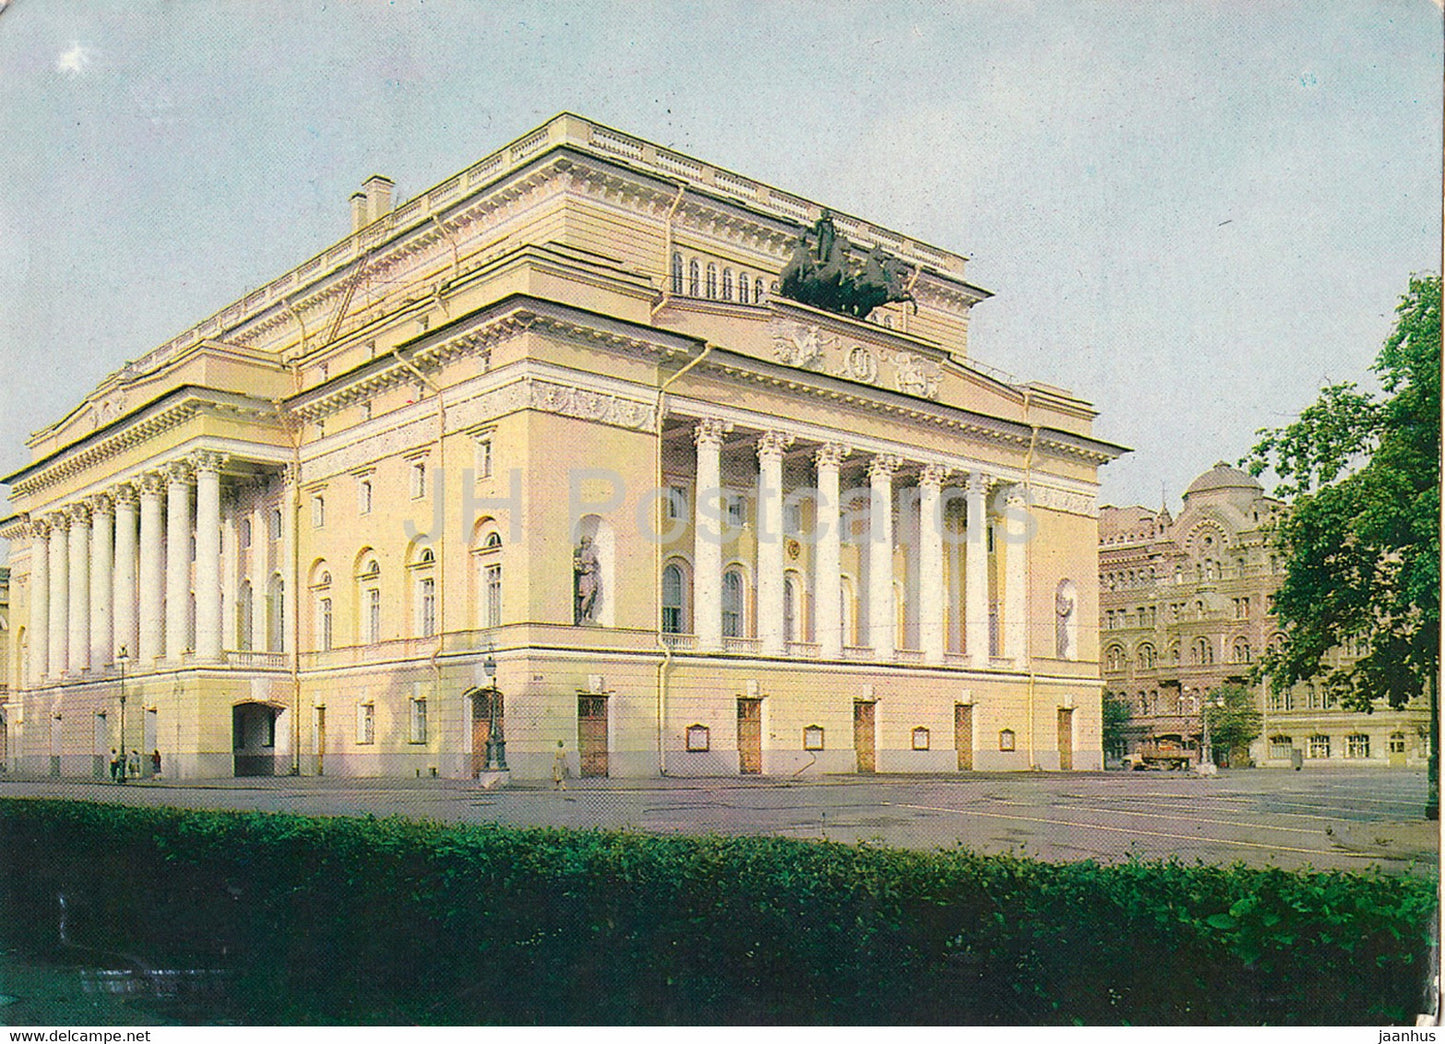 Leningrad - St Petersburg - Pushkin Academic Drama Theatre - postal stationery - 1981 - Russia - used - JH Postcards